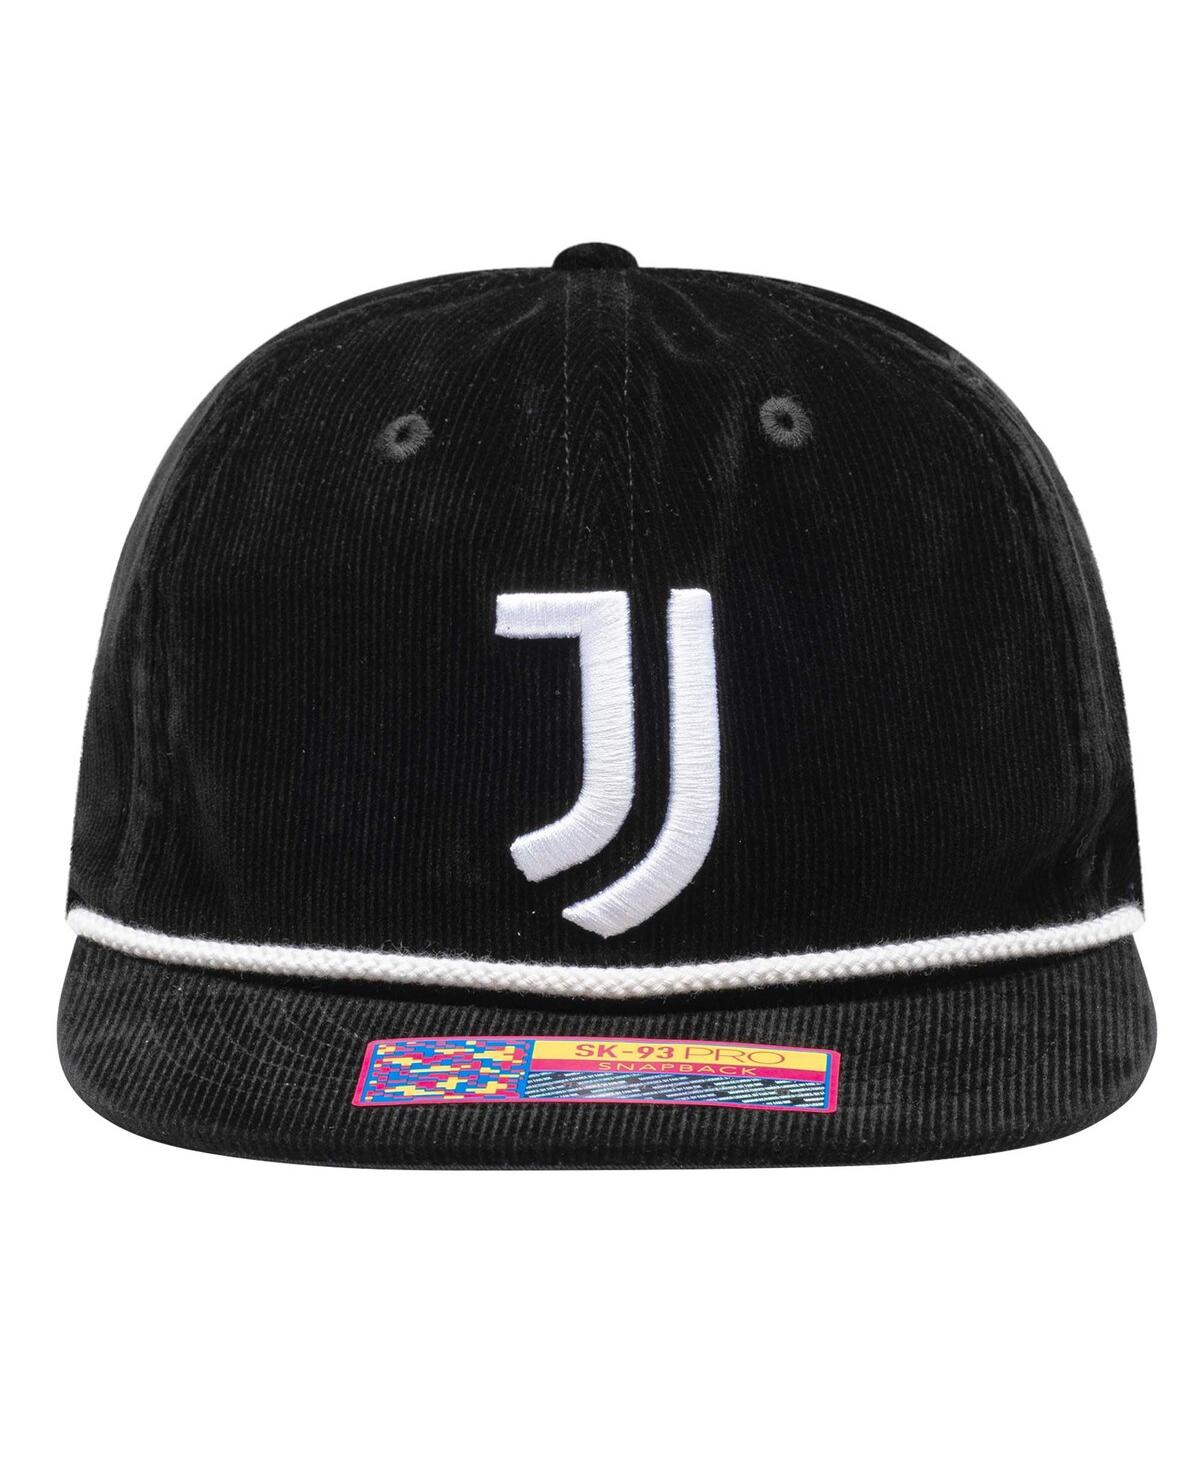 Shop Fan Ink Men's Black Juventus Snow Beach Adjustable Hat